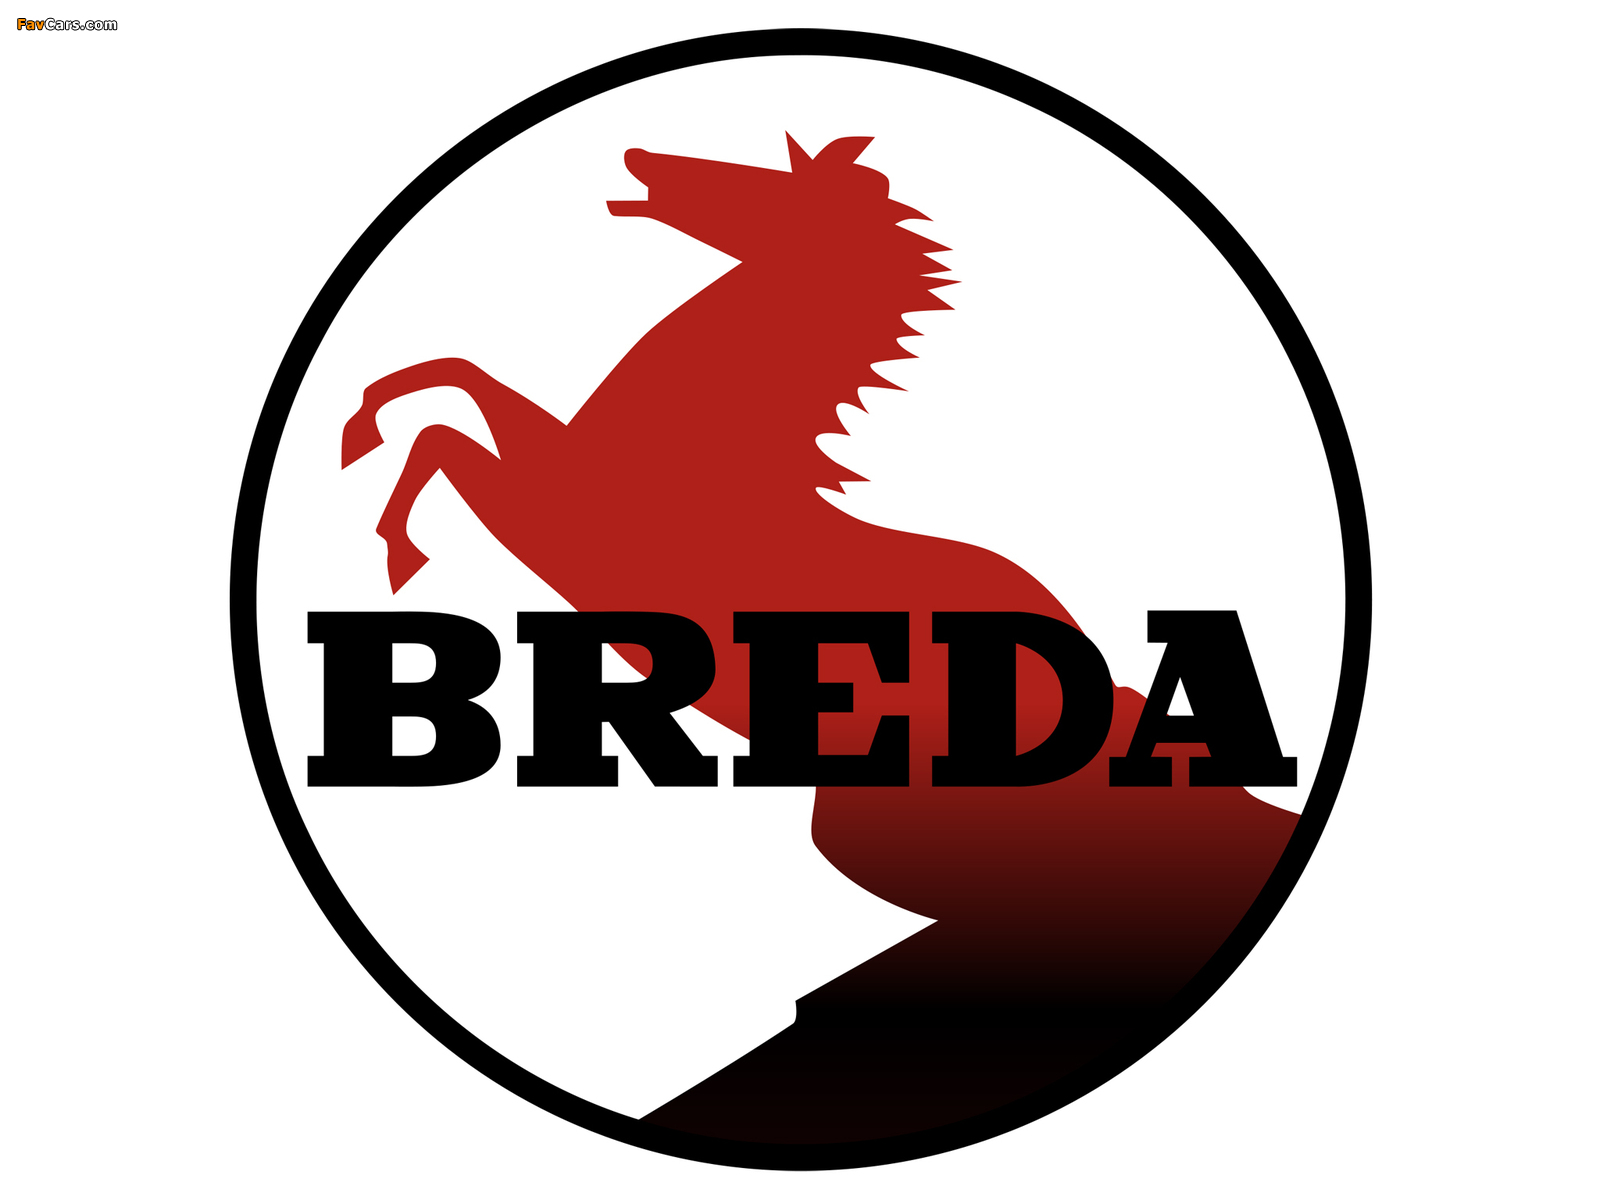 Breda images (1600 x 1200)